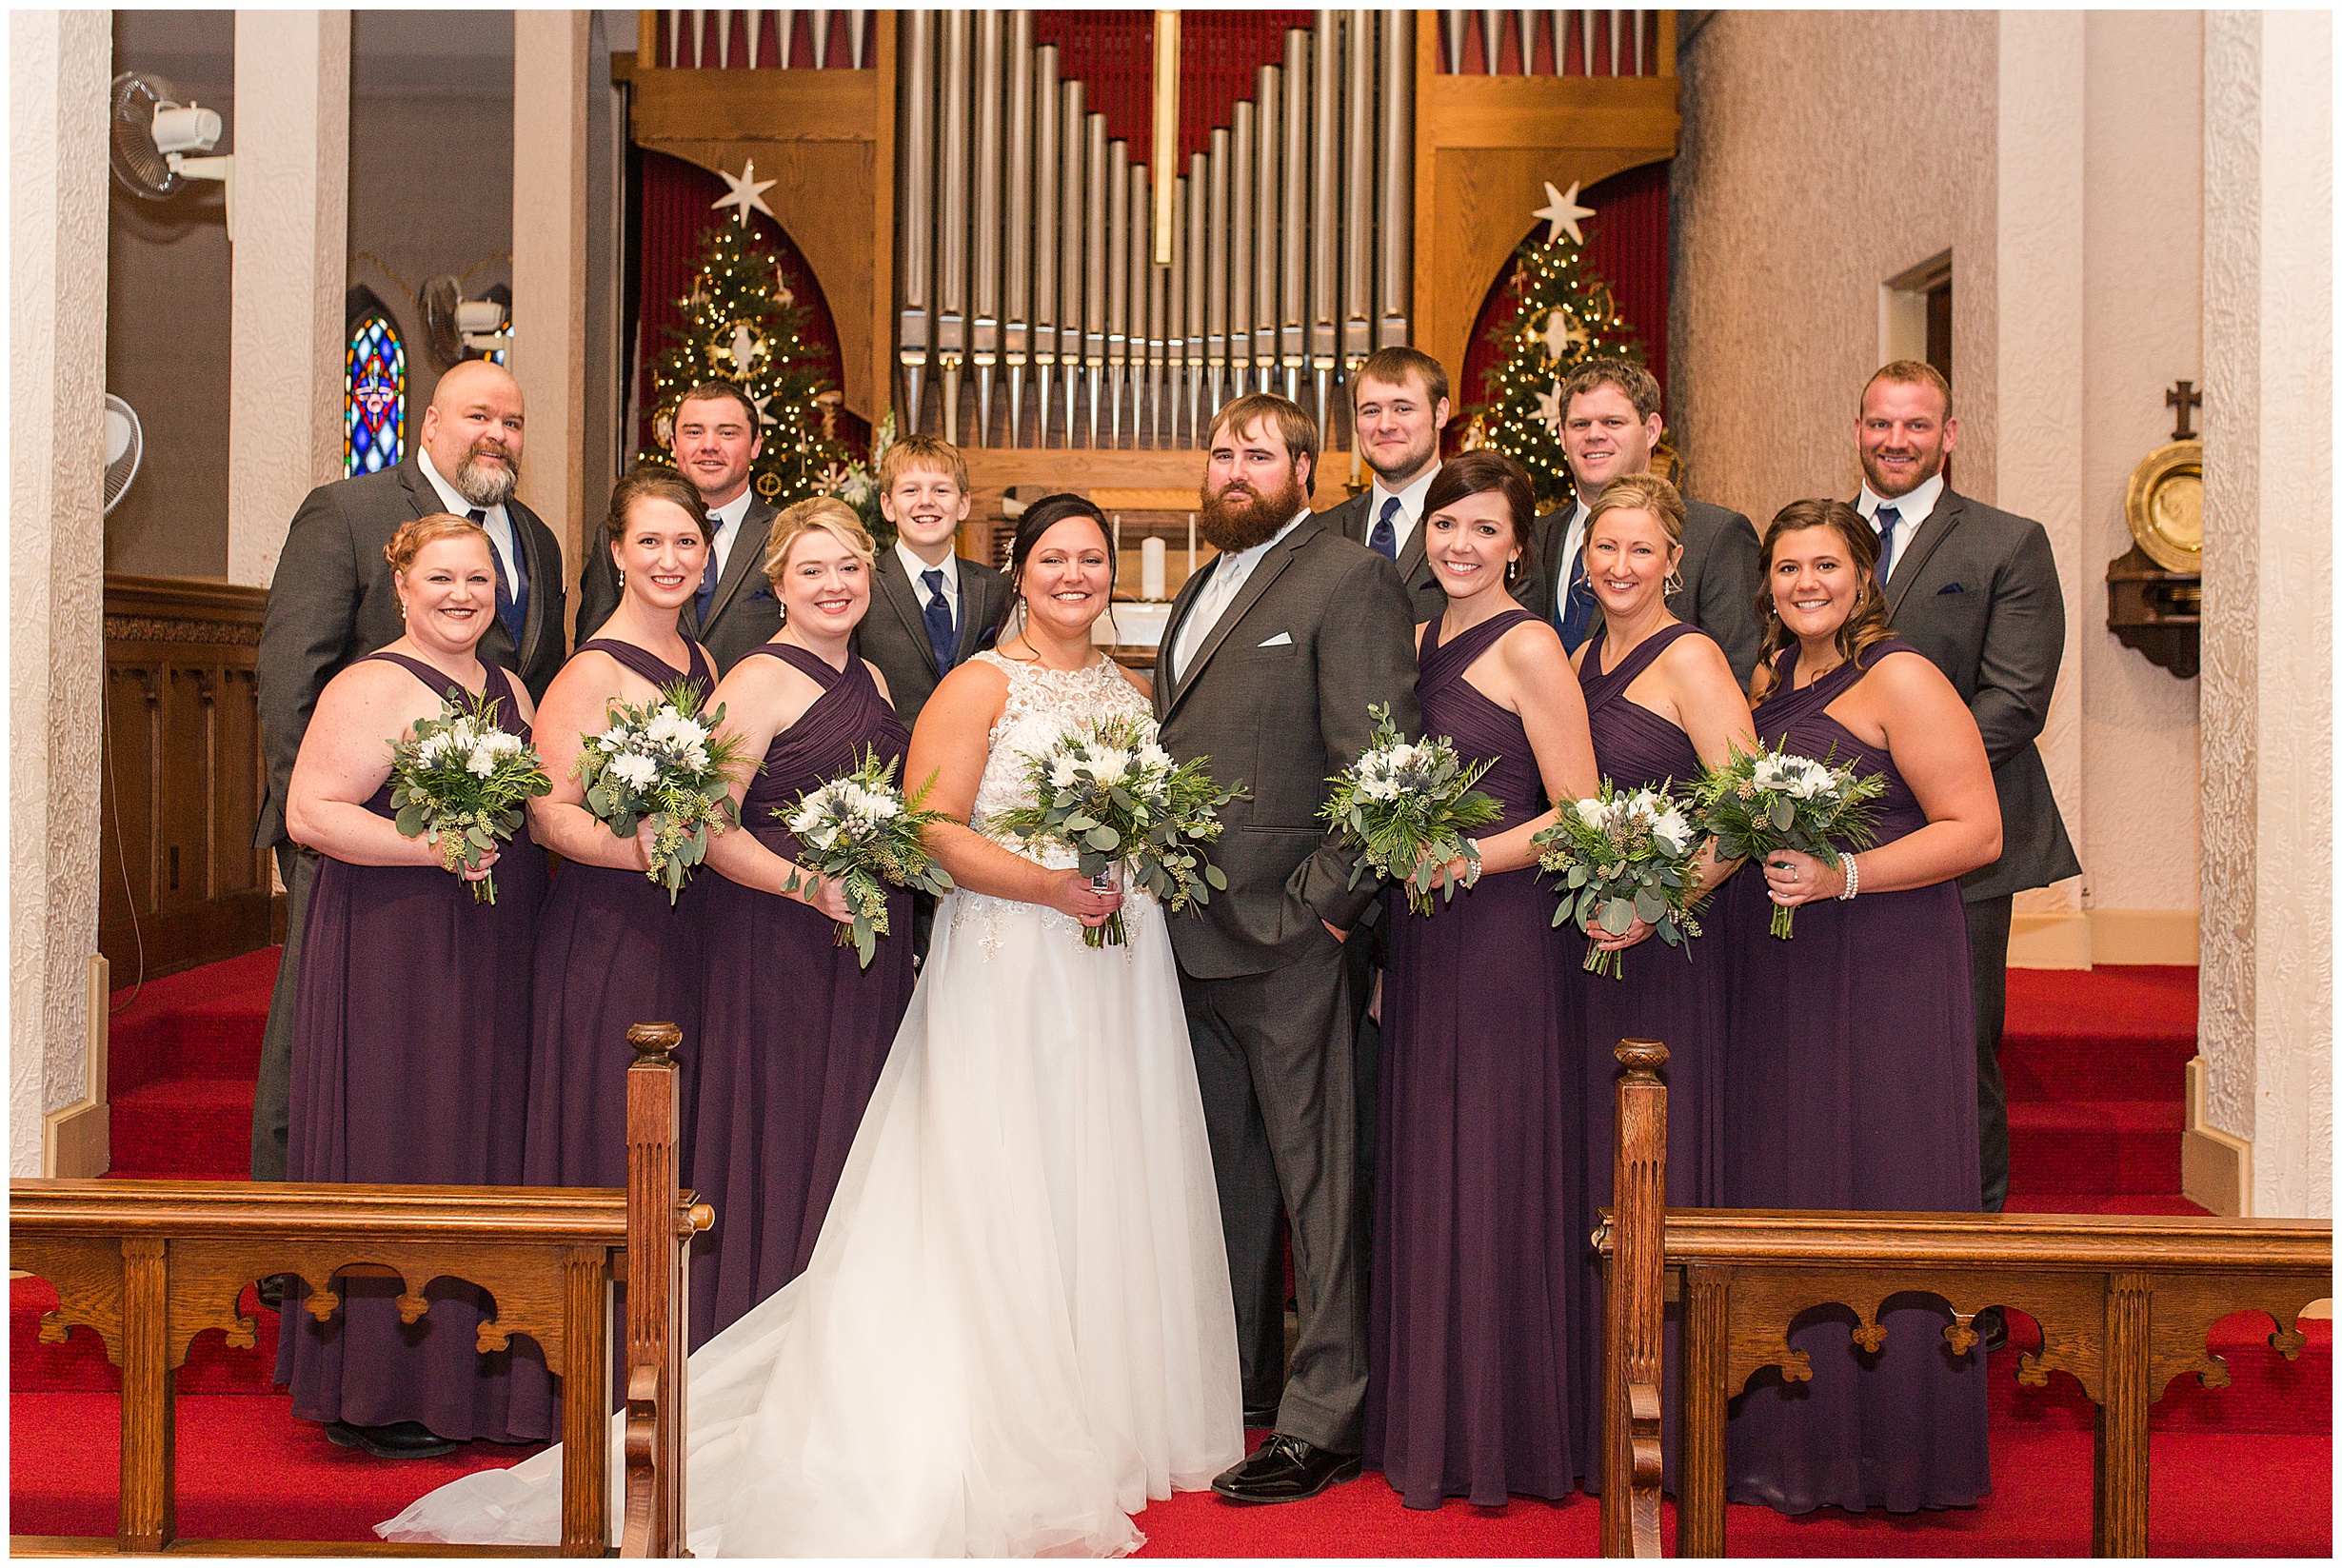 Iowa City Photographers - Decorah Wedding -Megan Snitker Photography_0146.jpg